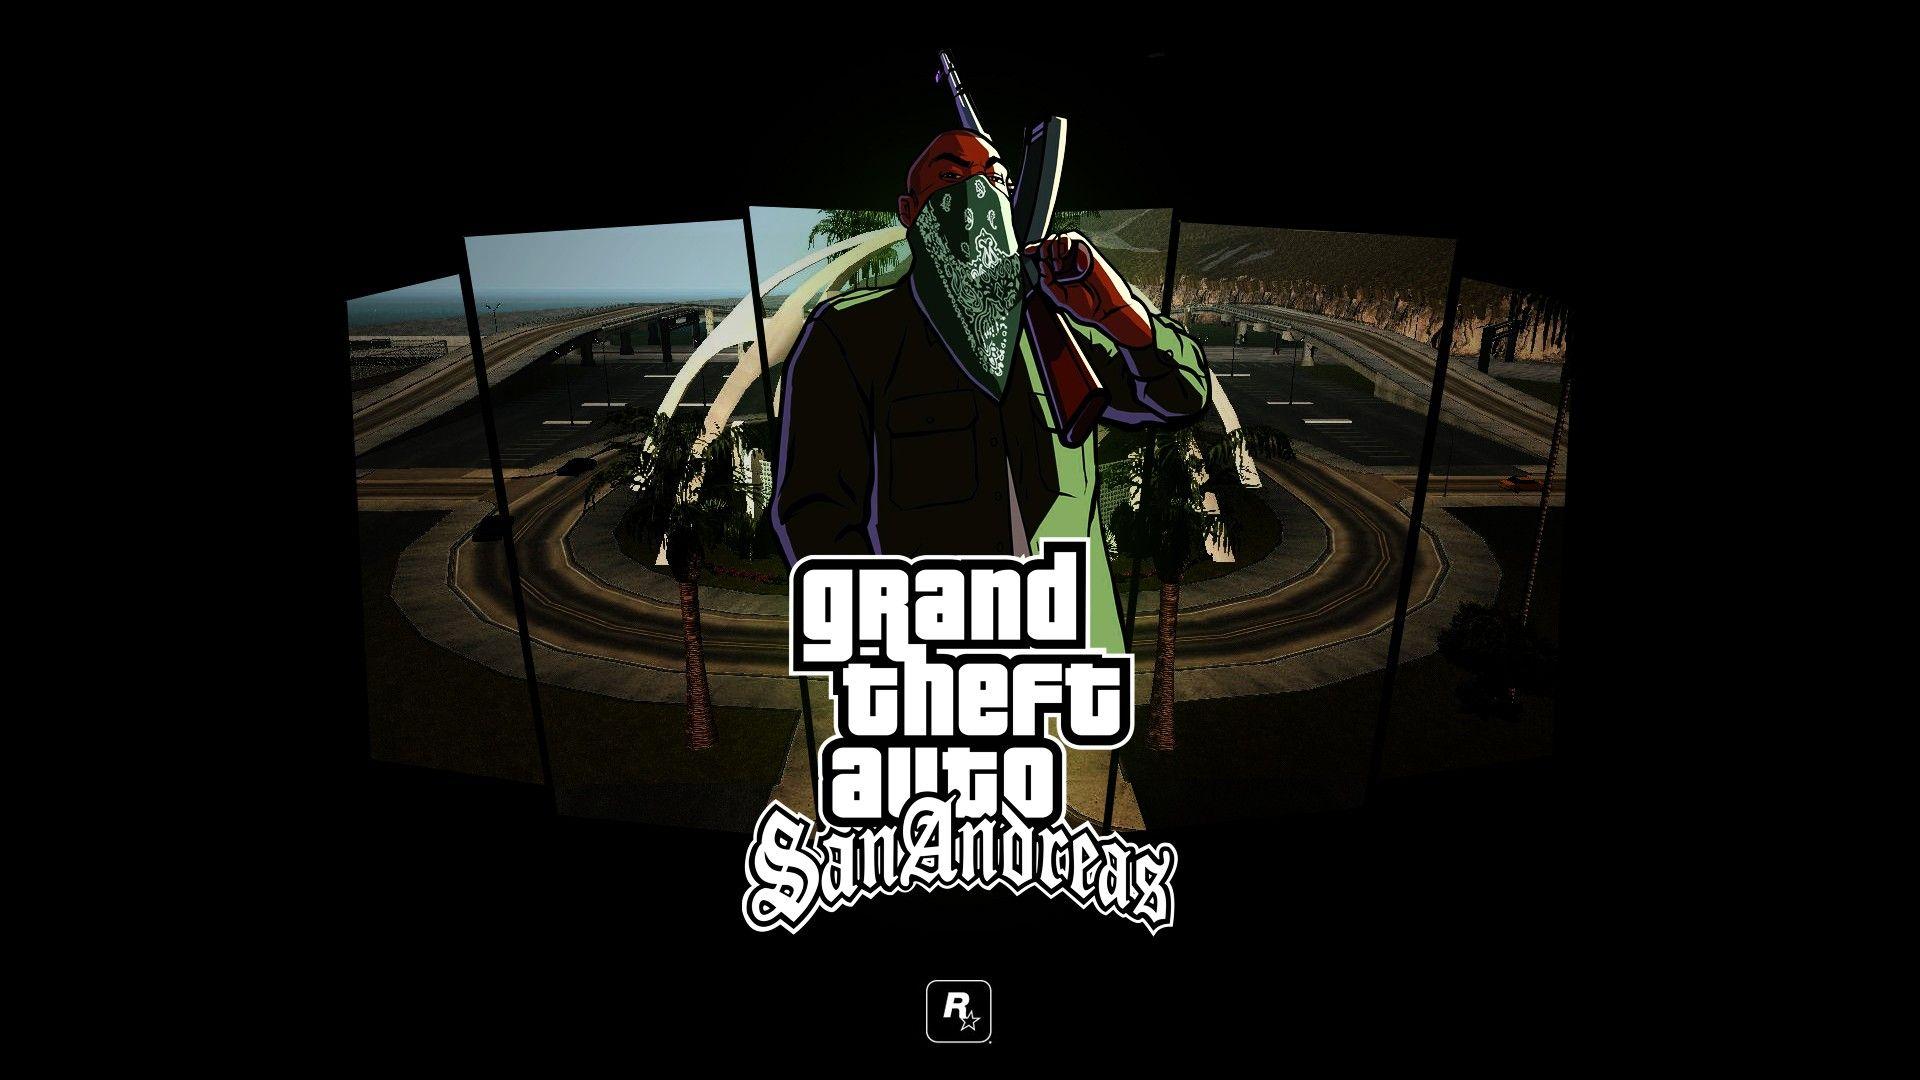 Grand Theft Auto San Andreas, Rockstar Games, Video Games